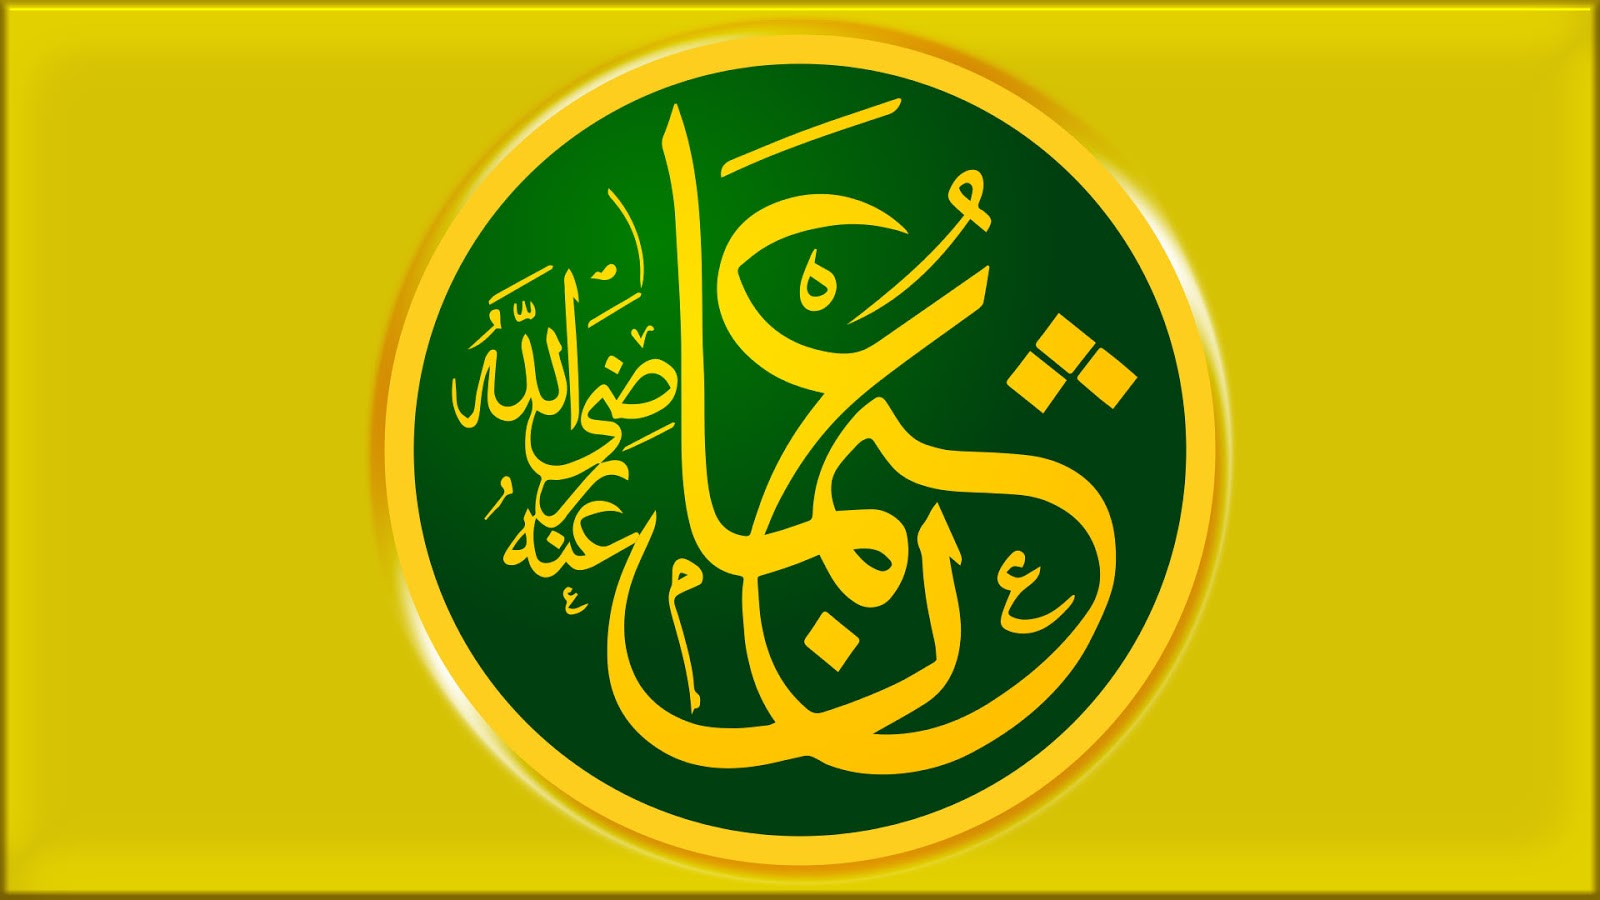 Uthman Ibn Affan islamic calligraphy